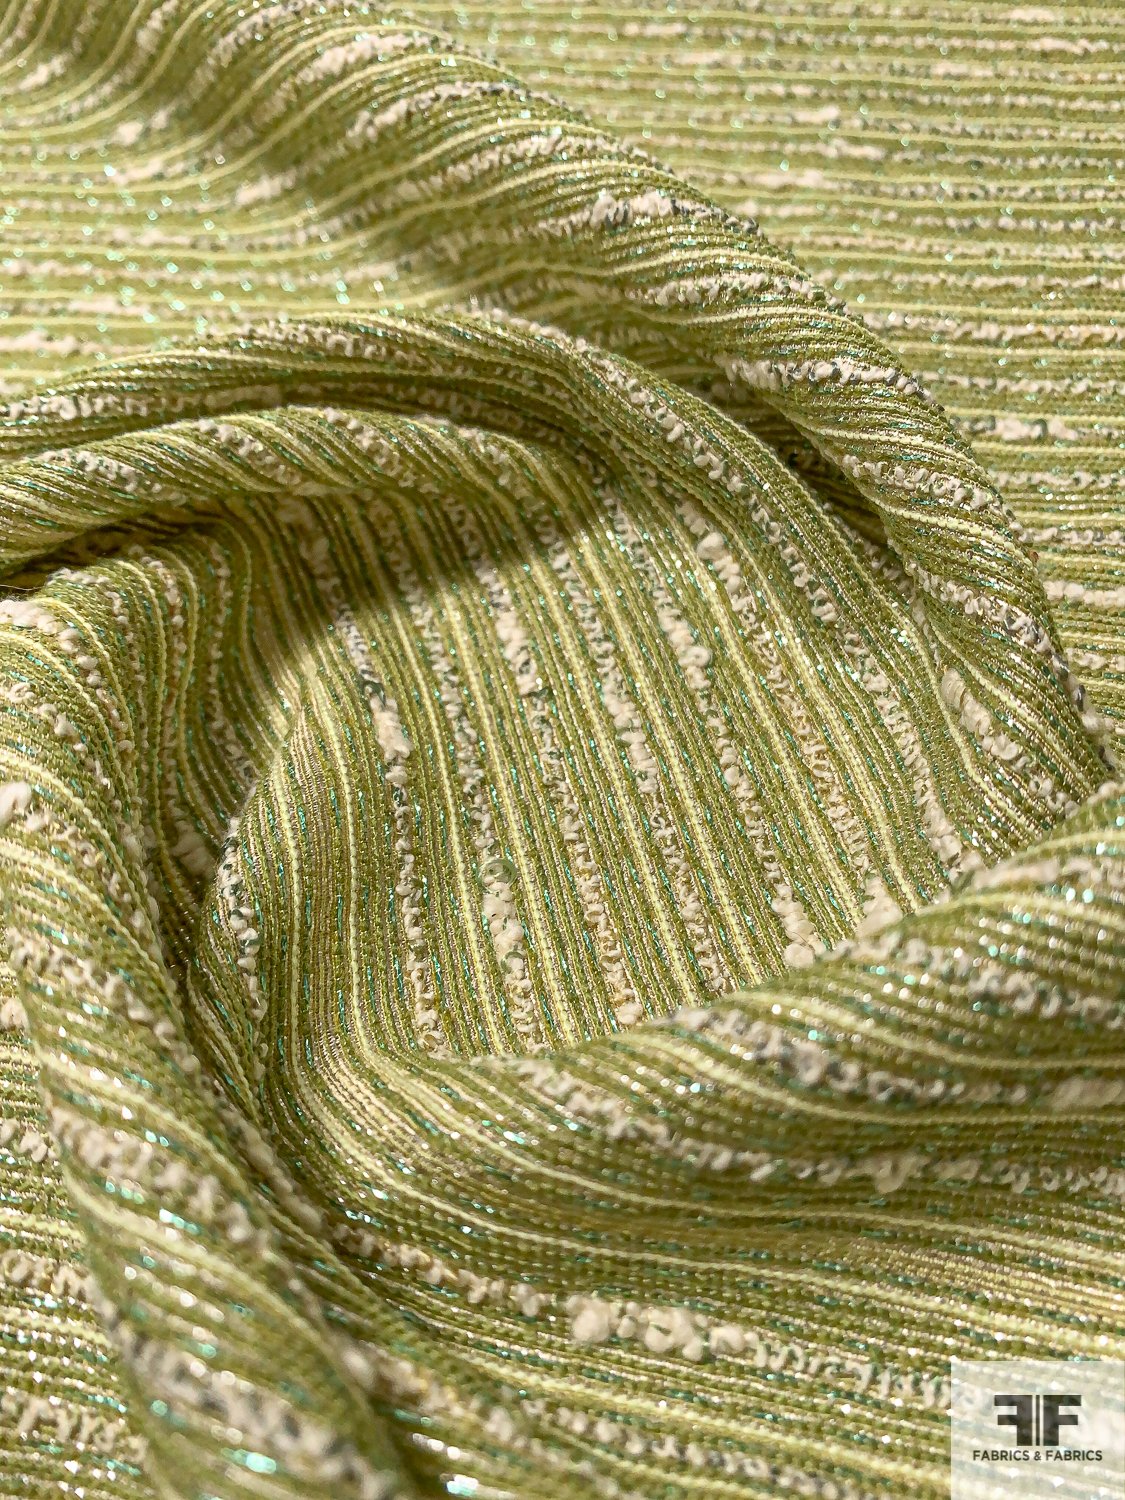 Italian Knub Striped Tweed-Look Metallic Brocade - Lime Green / Cream